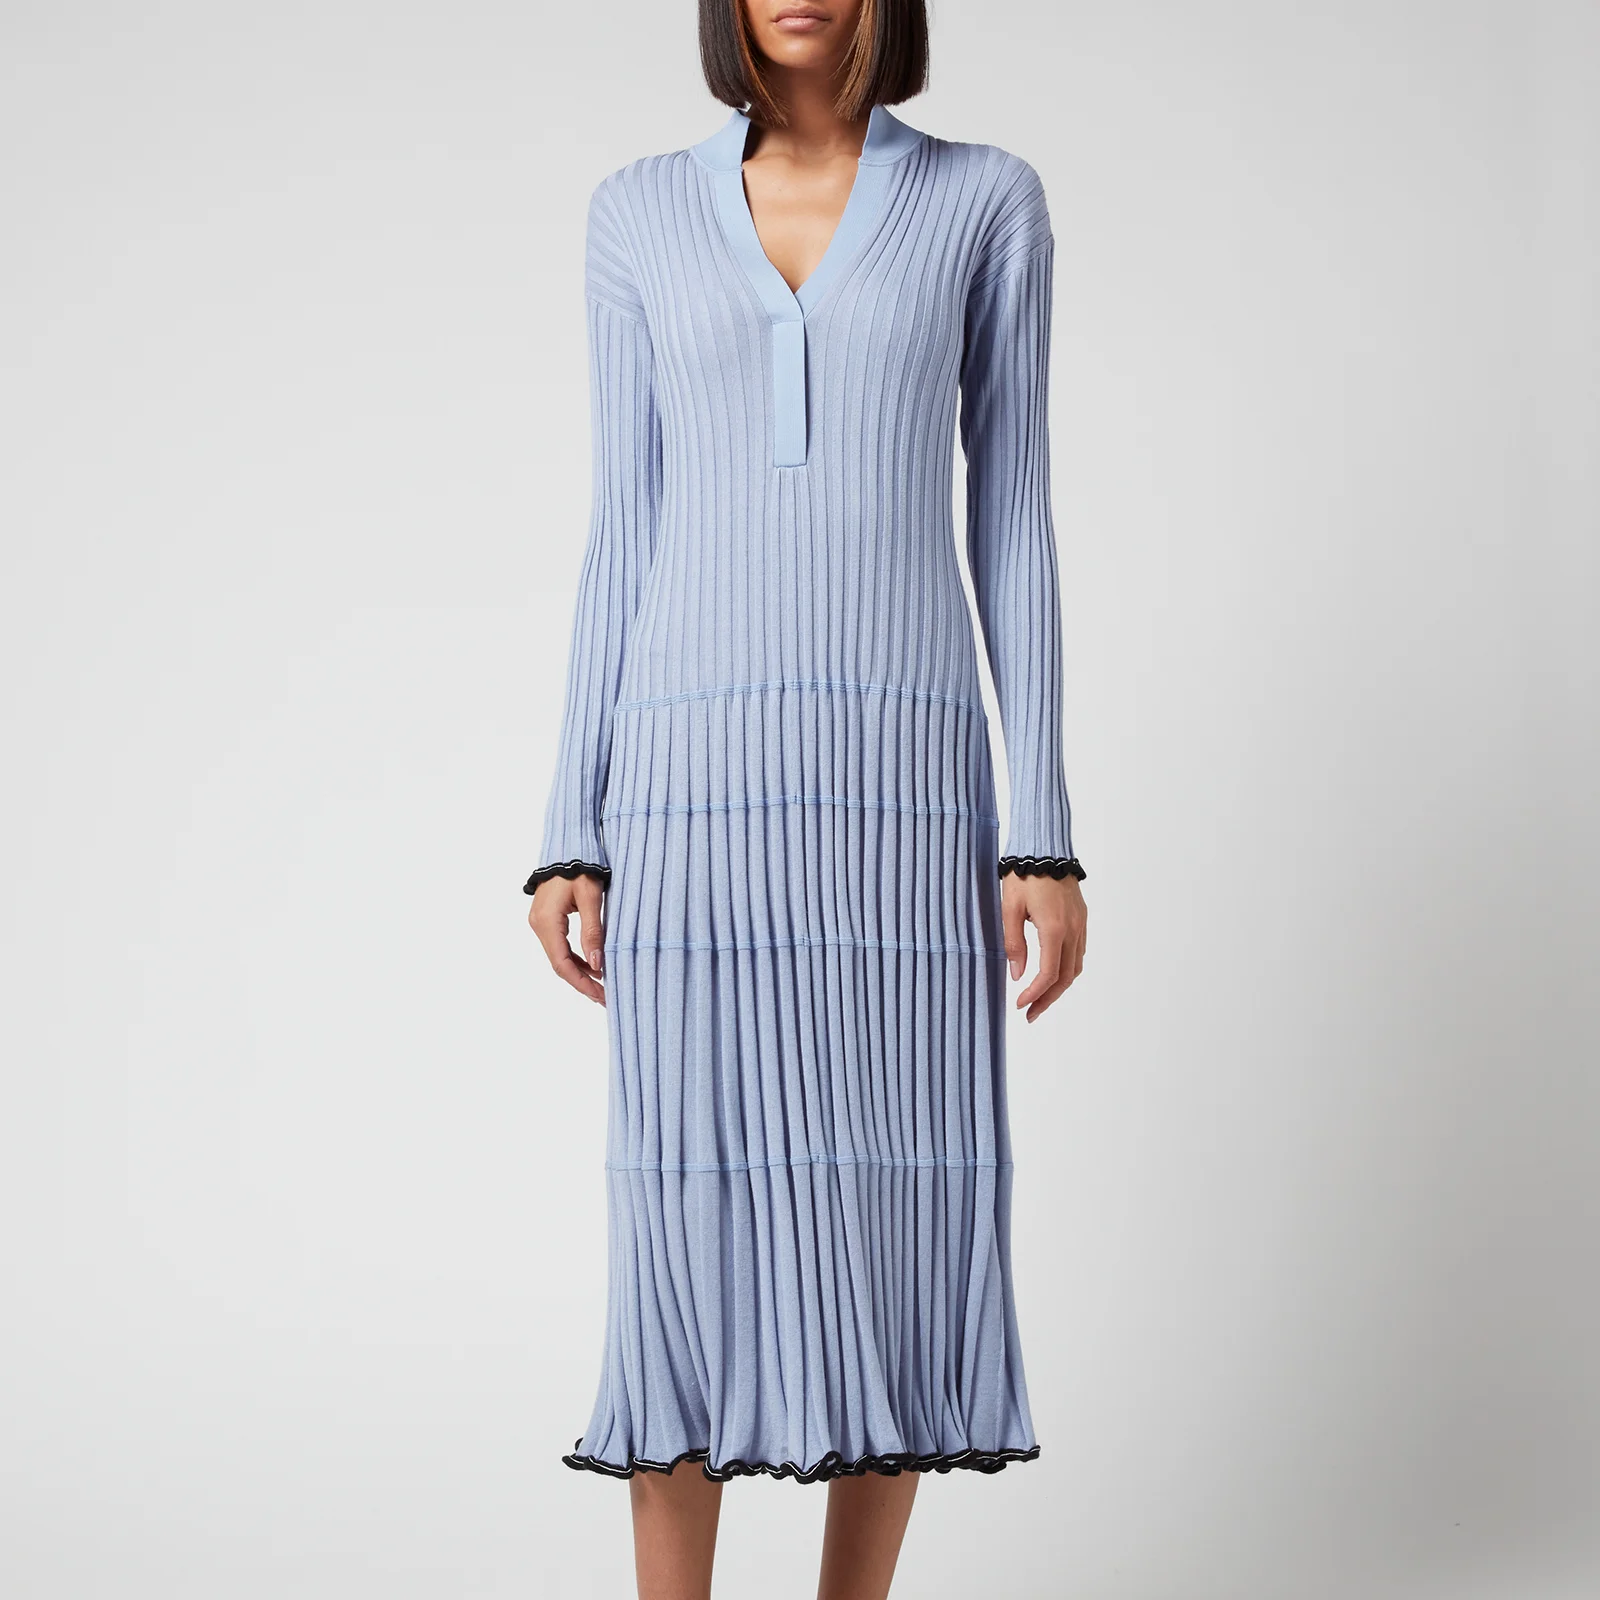 Proenza Schouler Women's Silk Cashmere Contrast Trim V-Neck Dress - Periwinkle Image 1